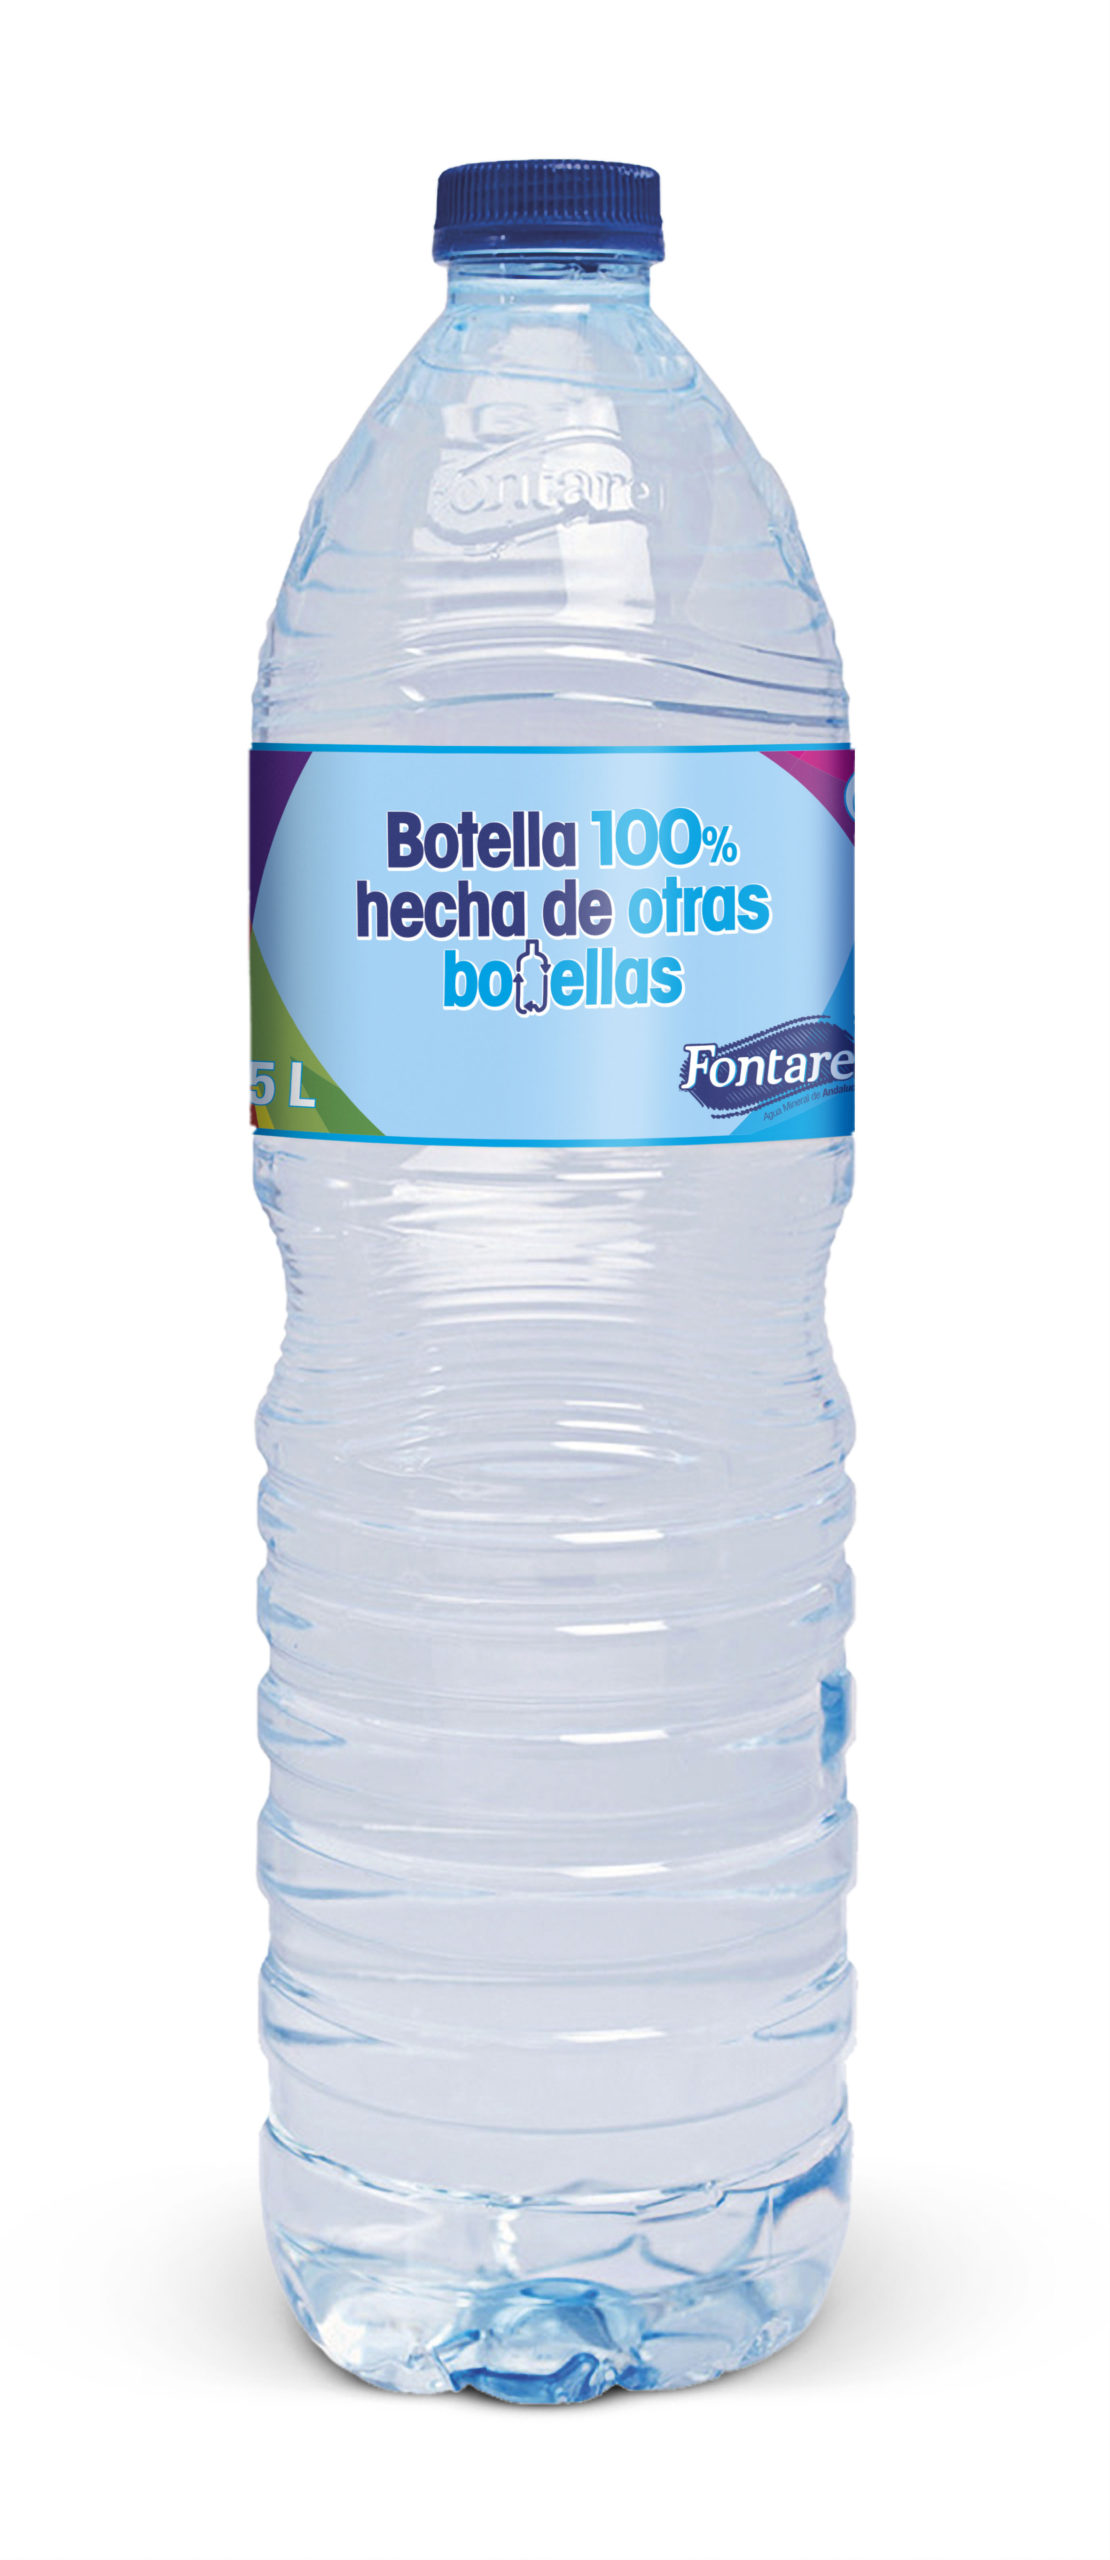 Lidl lanza la primera botella de agua de marca propia 100% rPET